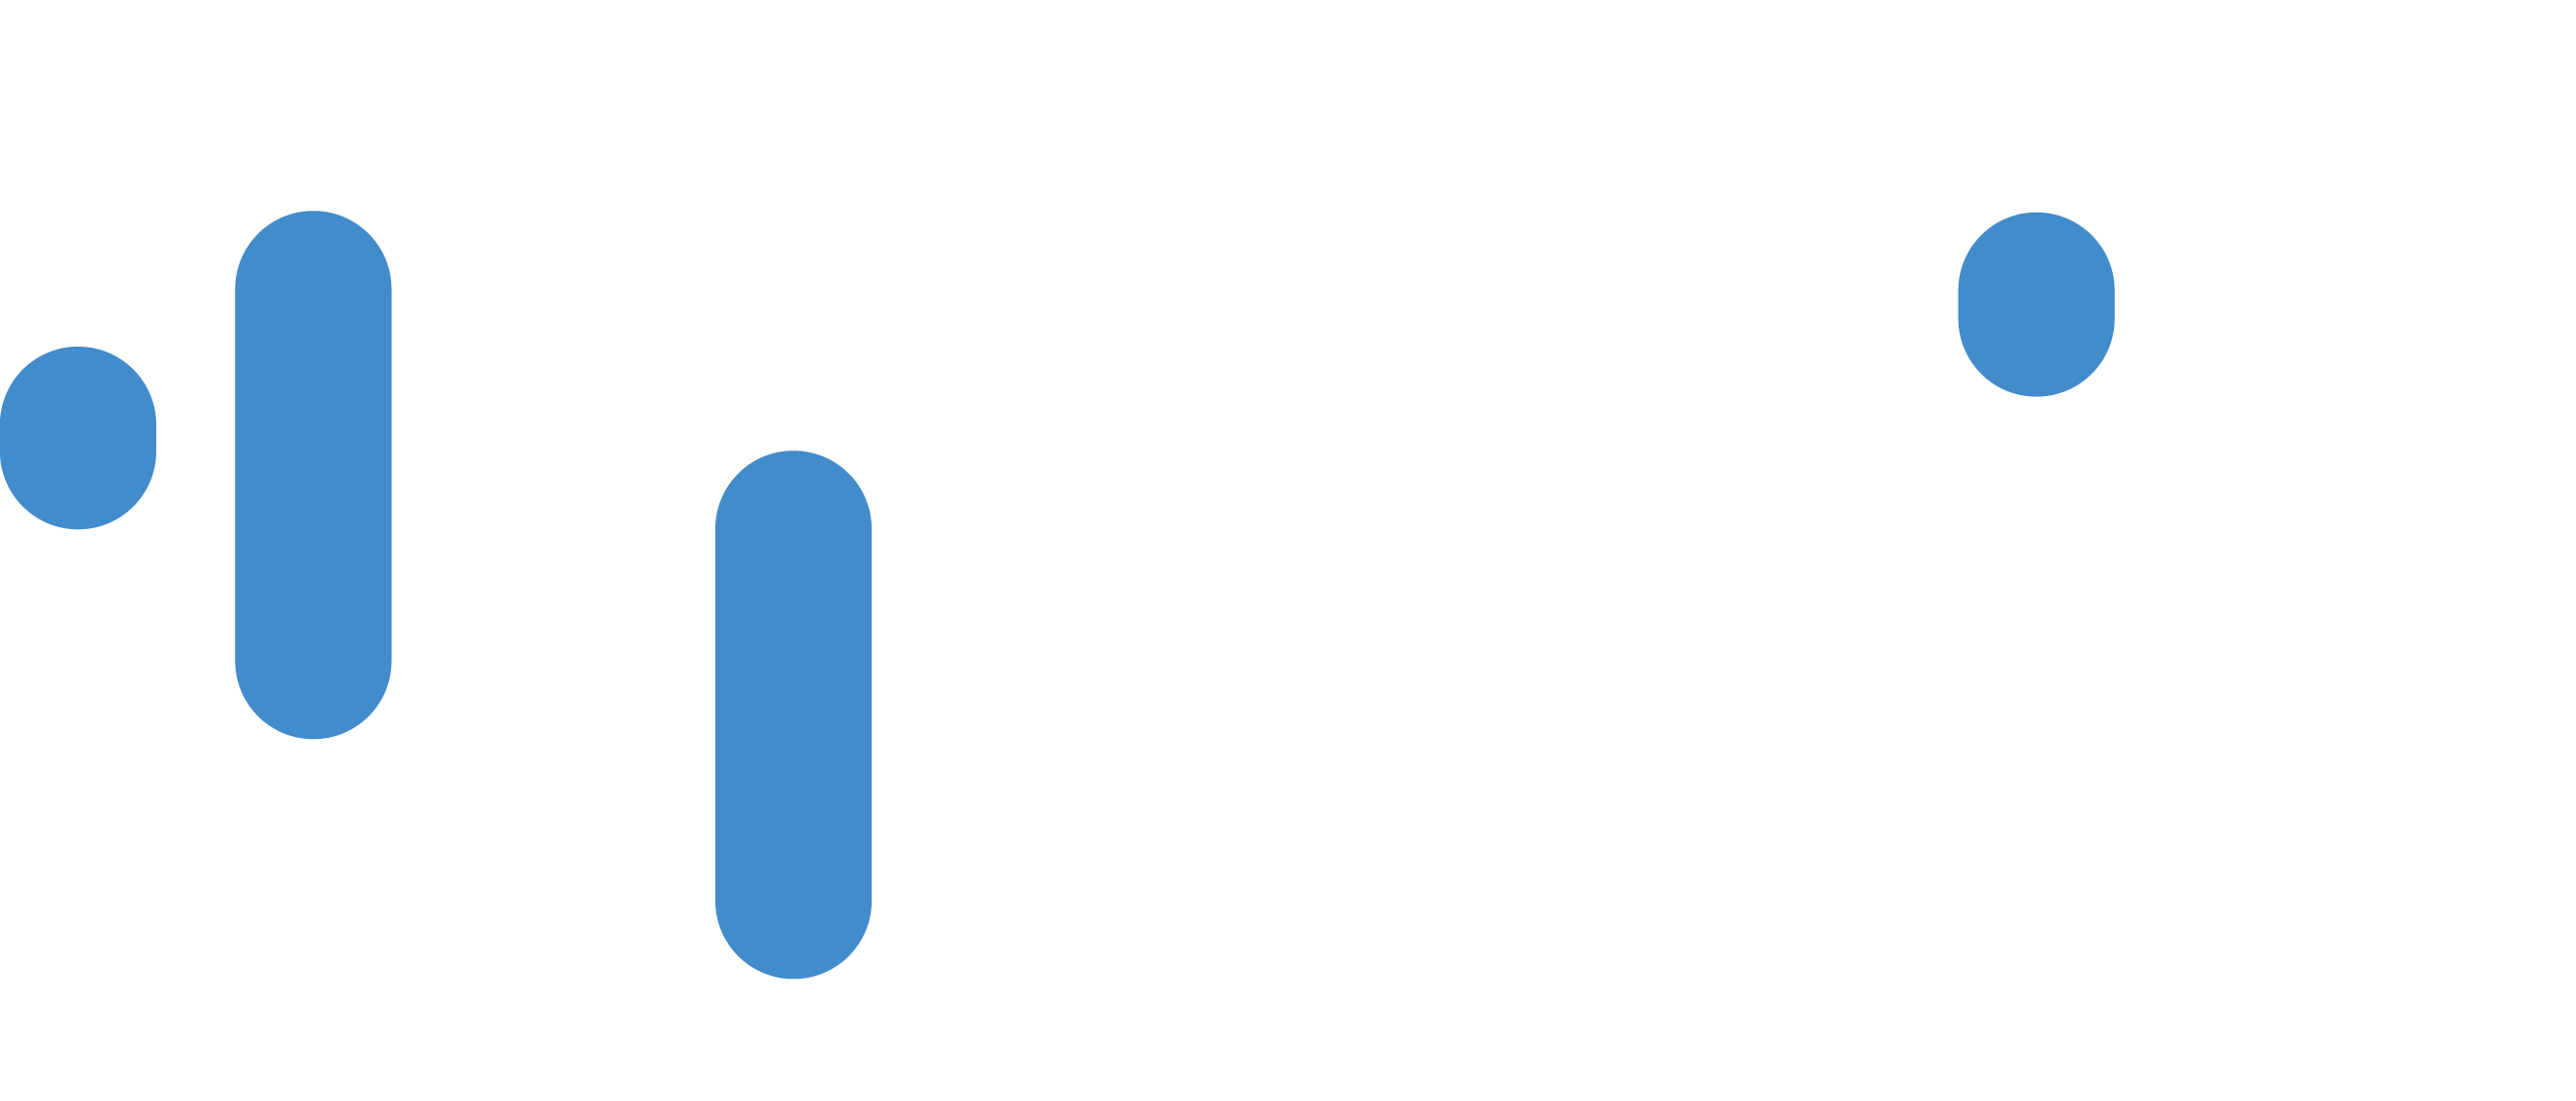 Imagine Connect